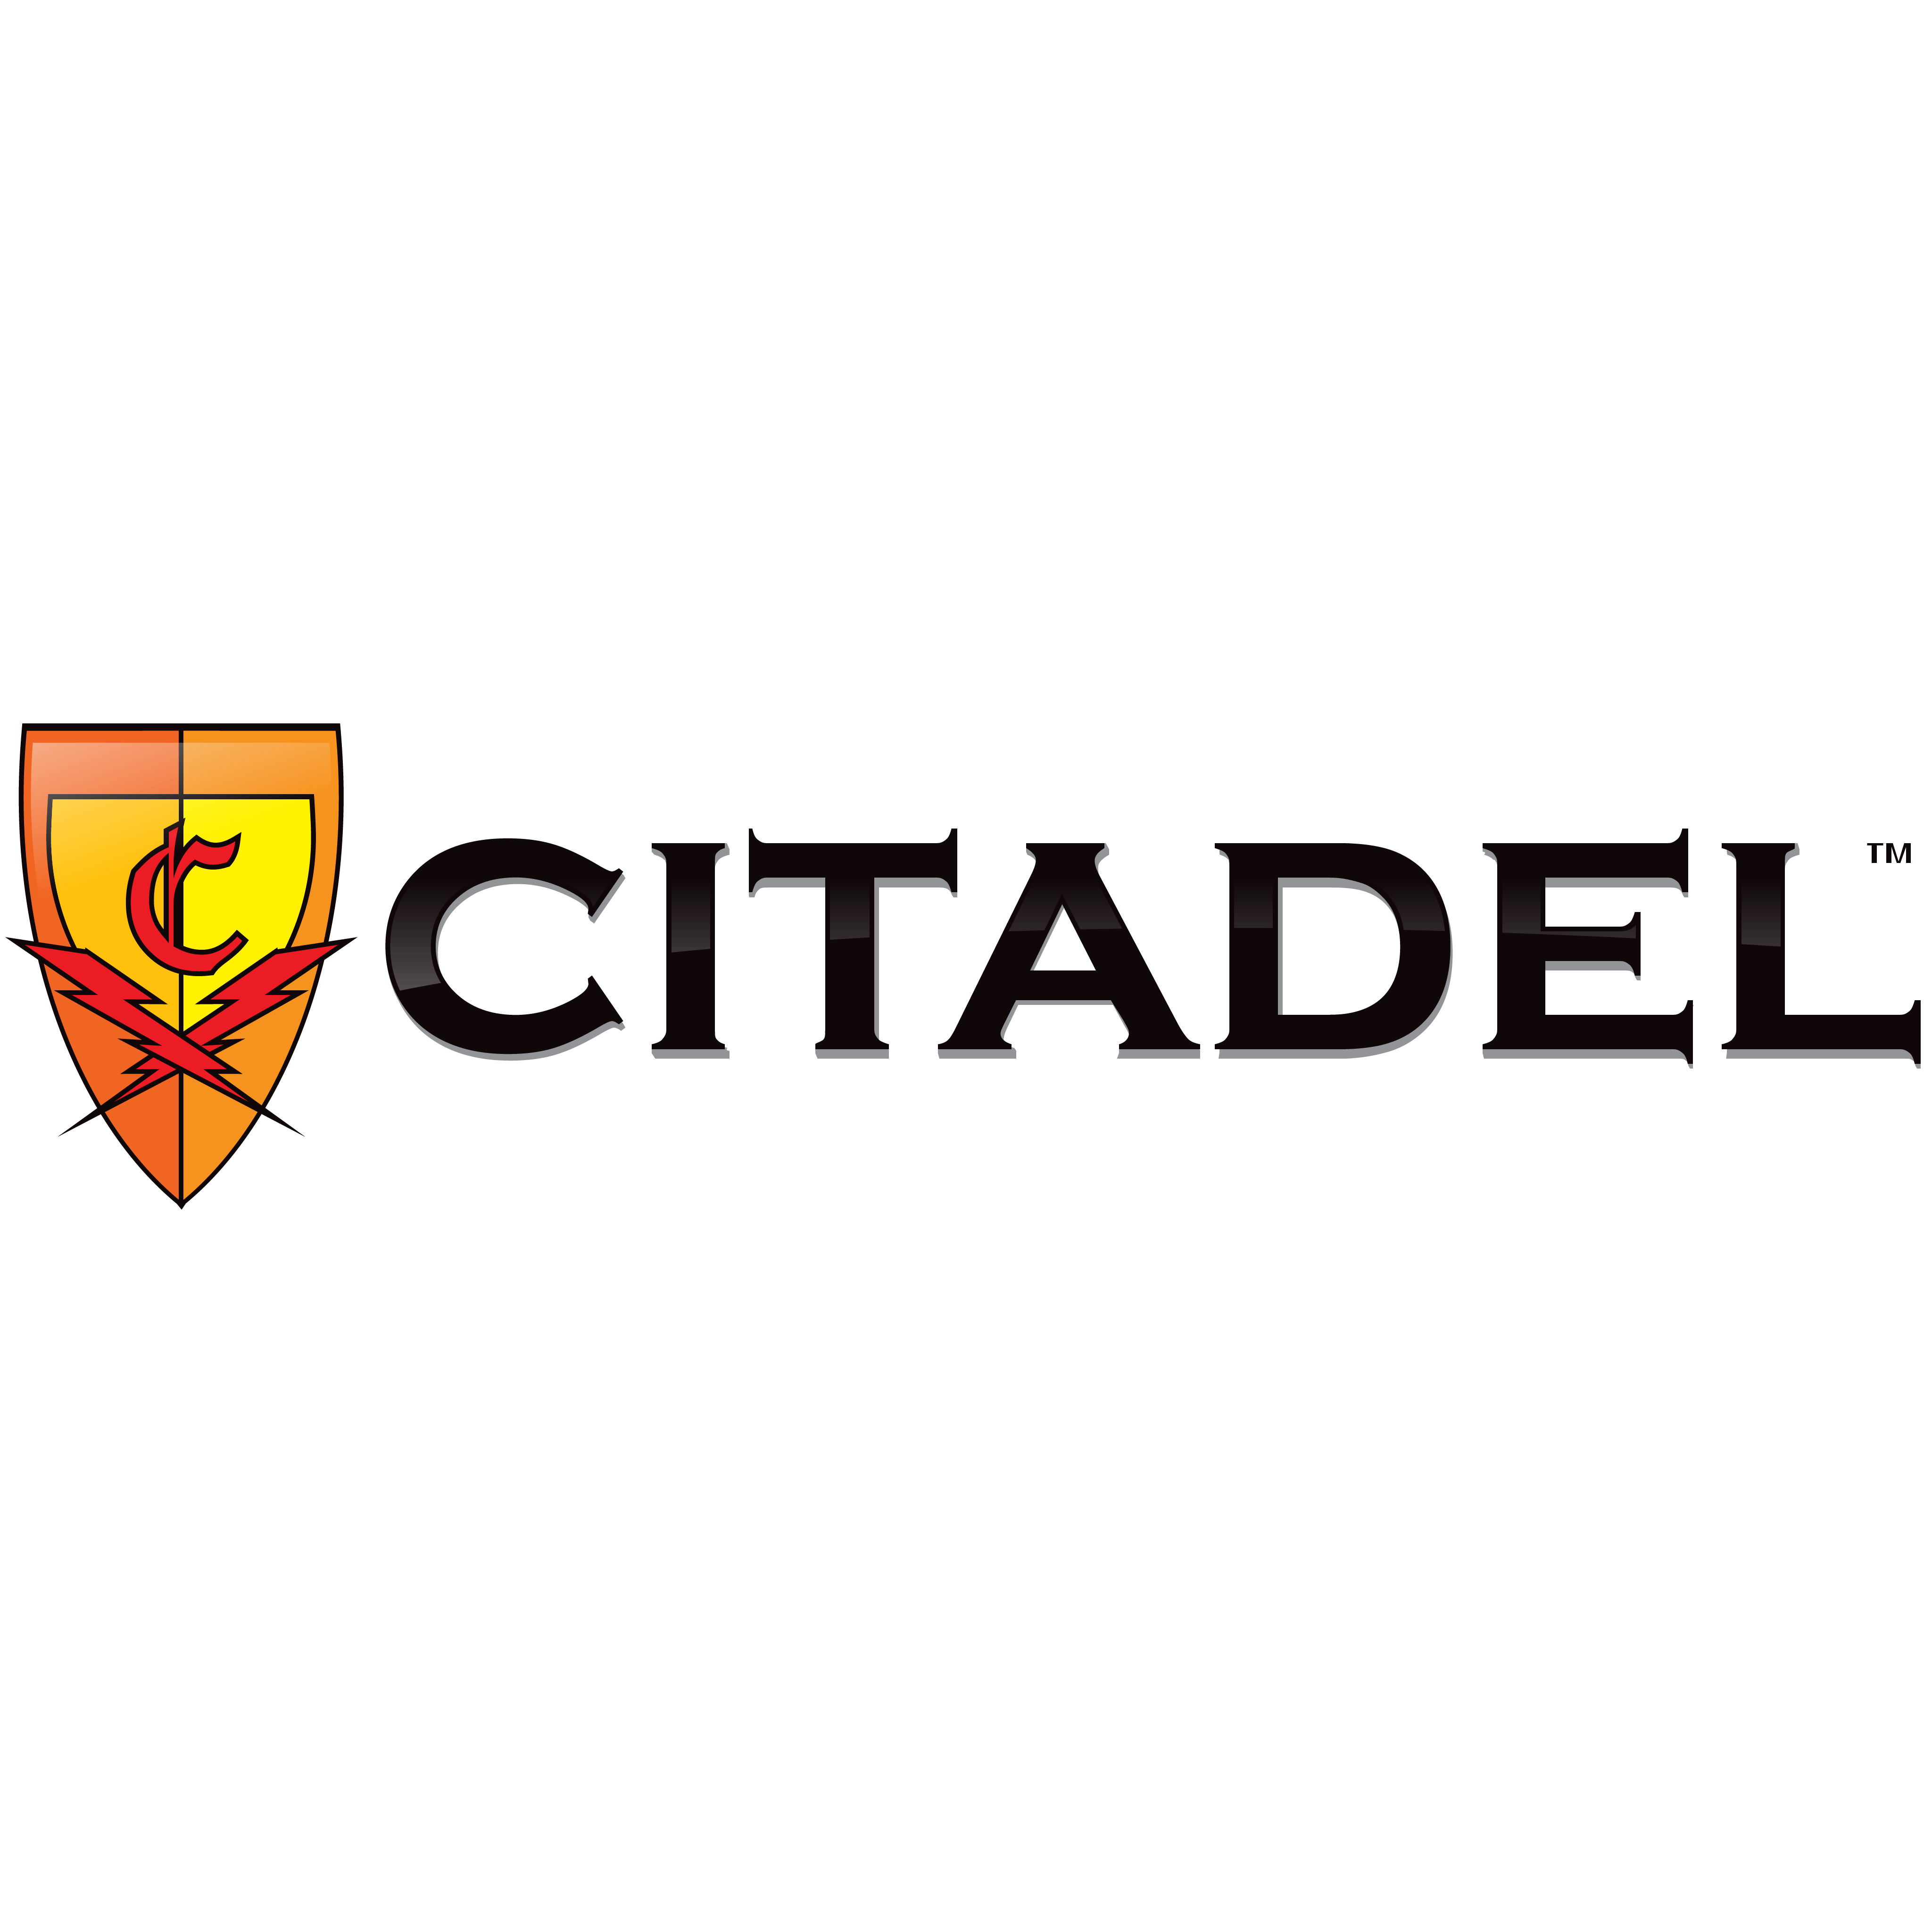 Citadel Logo - Citadel Logos